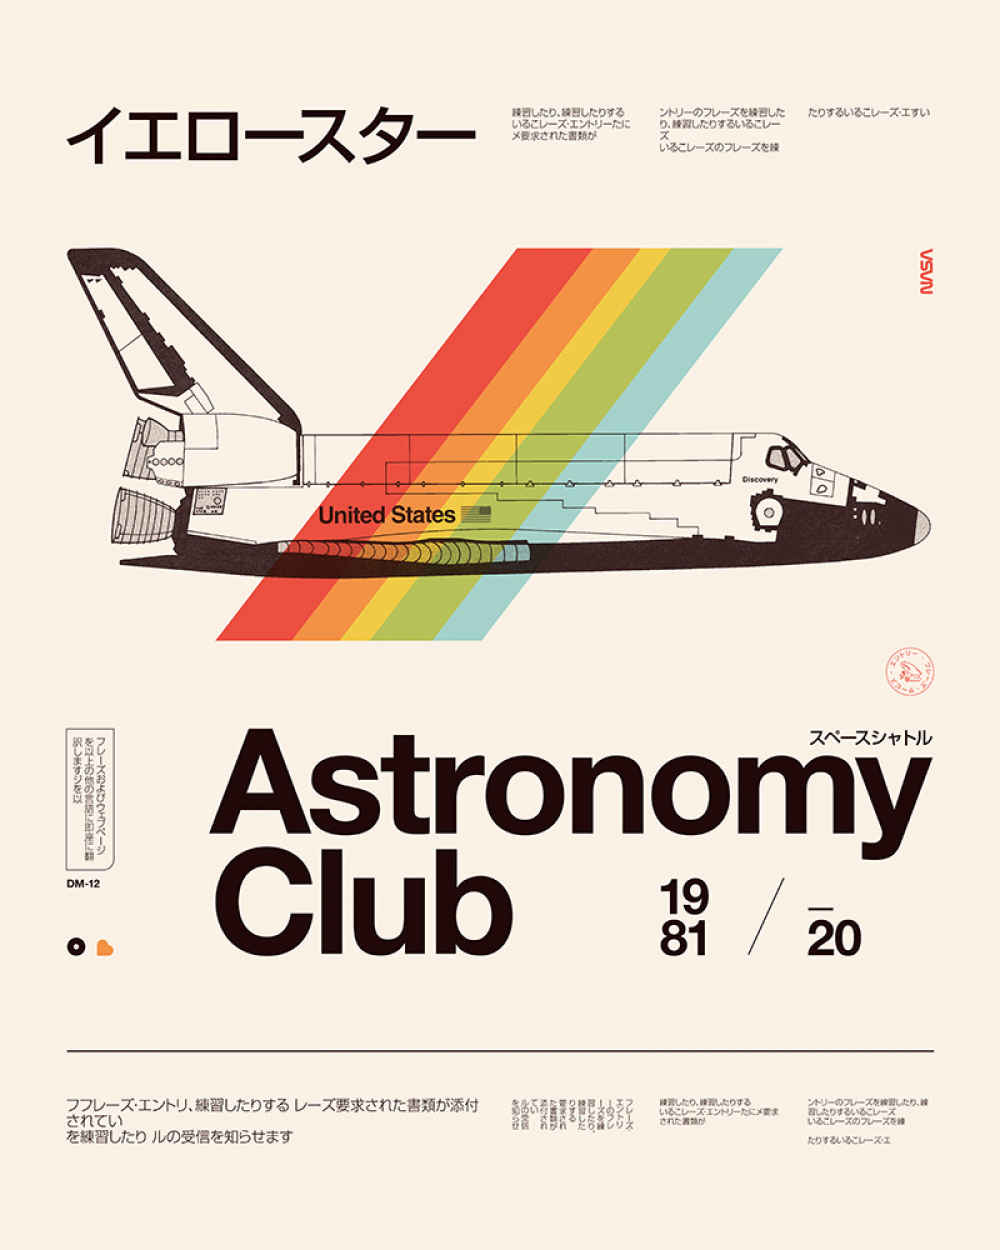 <dive><h1>Astronomy Club</h1></dive>